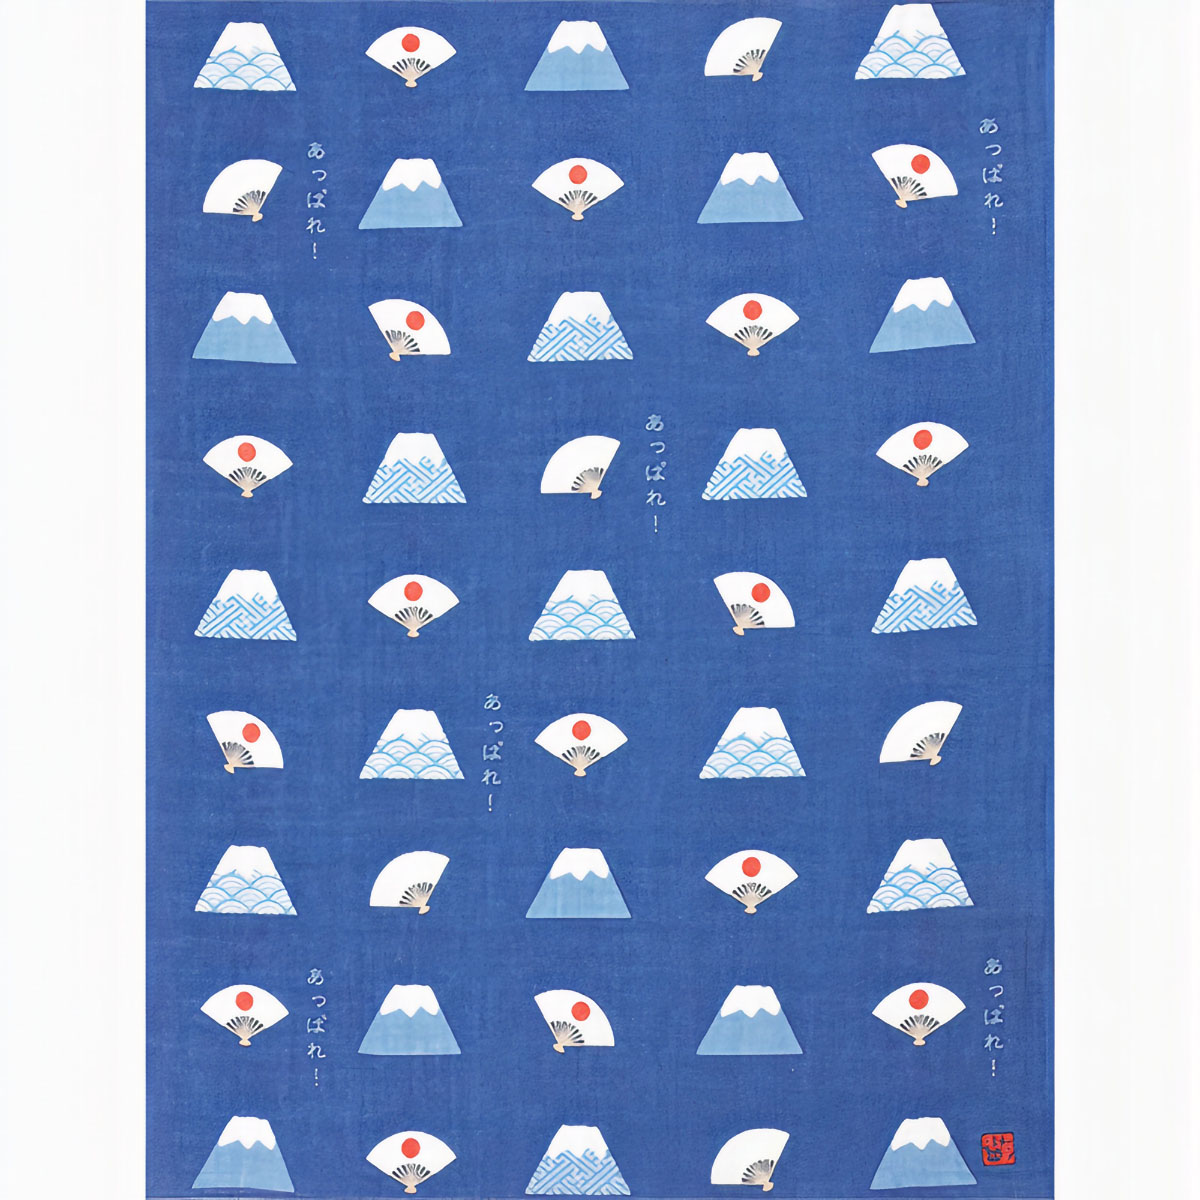 Japanese cotton handkerchief with Mont Fuji pattern, Appreciate